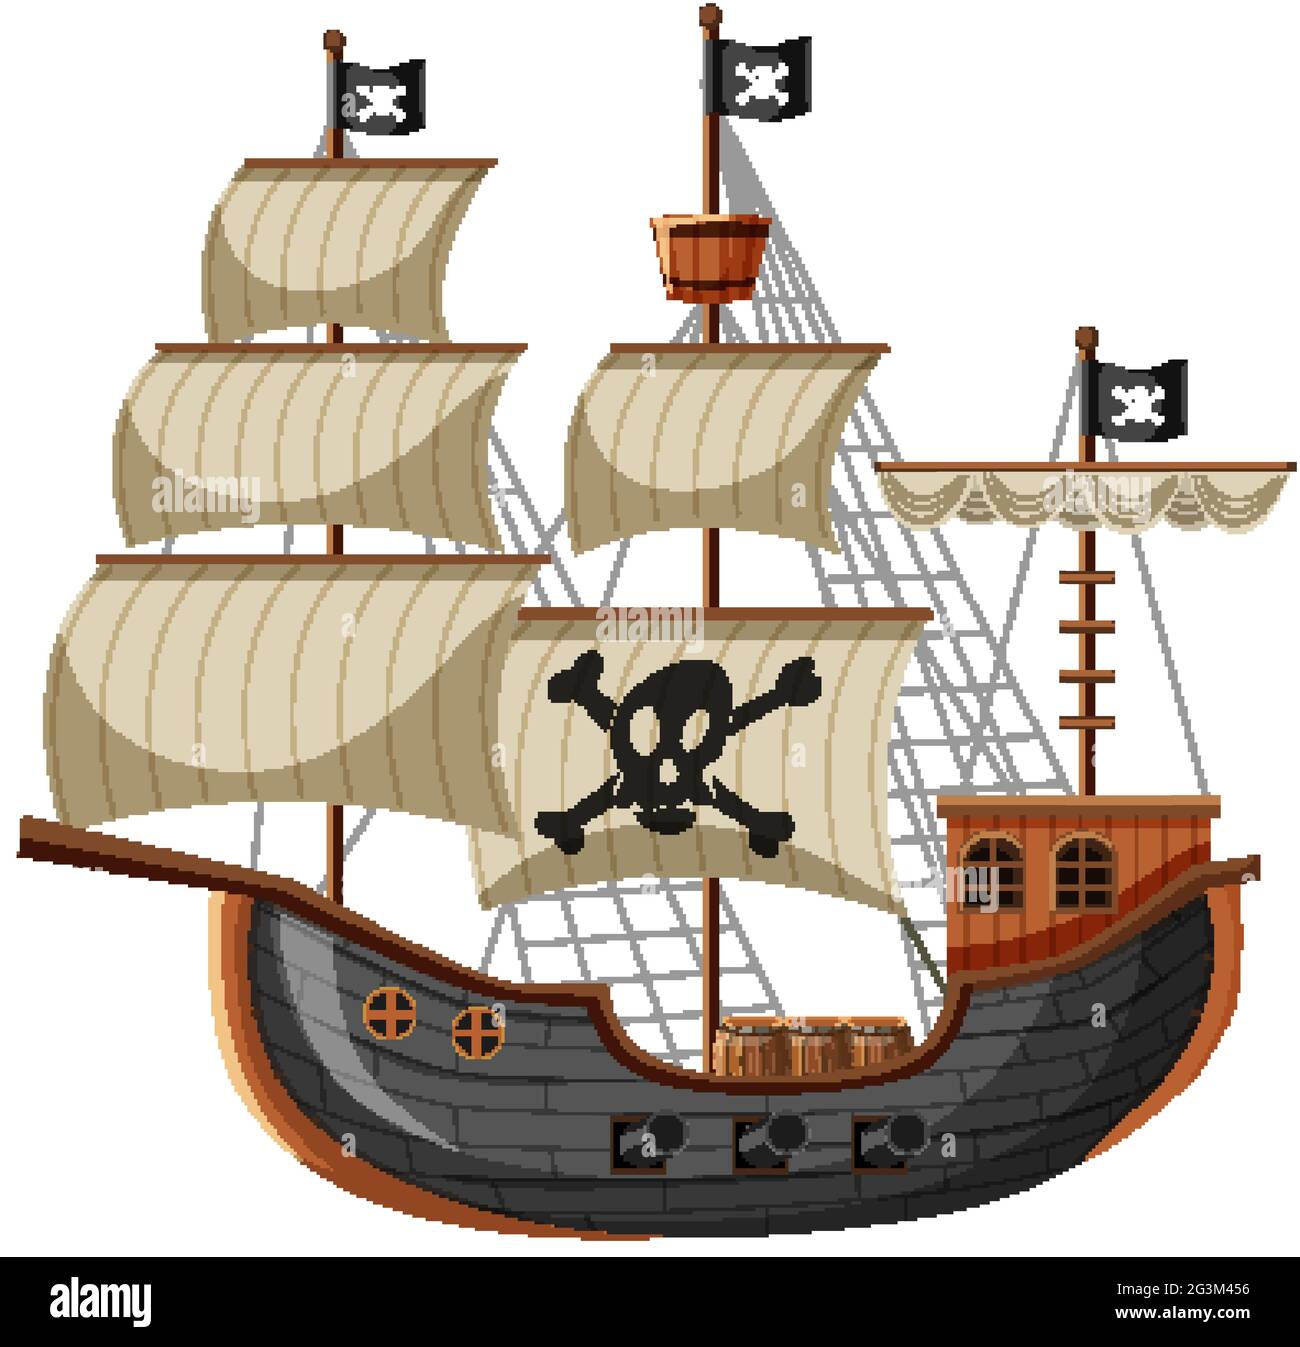 Barco pirata perla negro Imágenes vectoriales de stock - Alamy